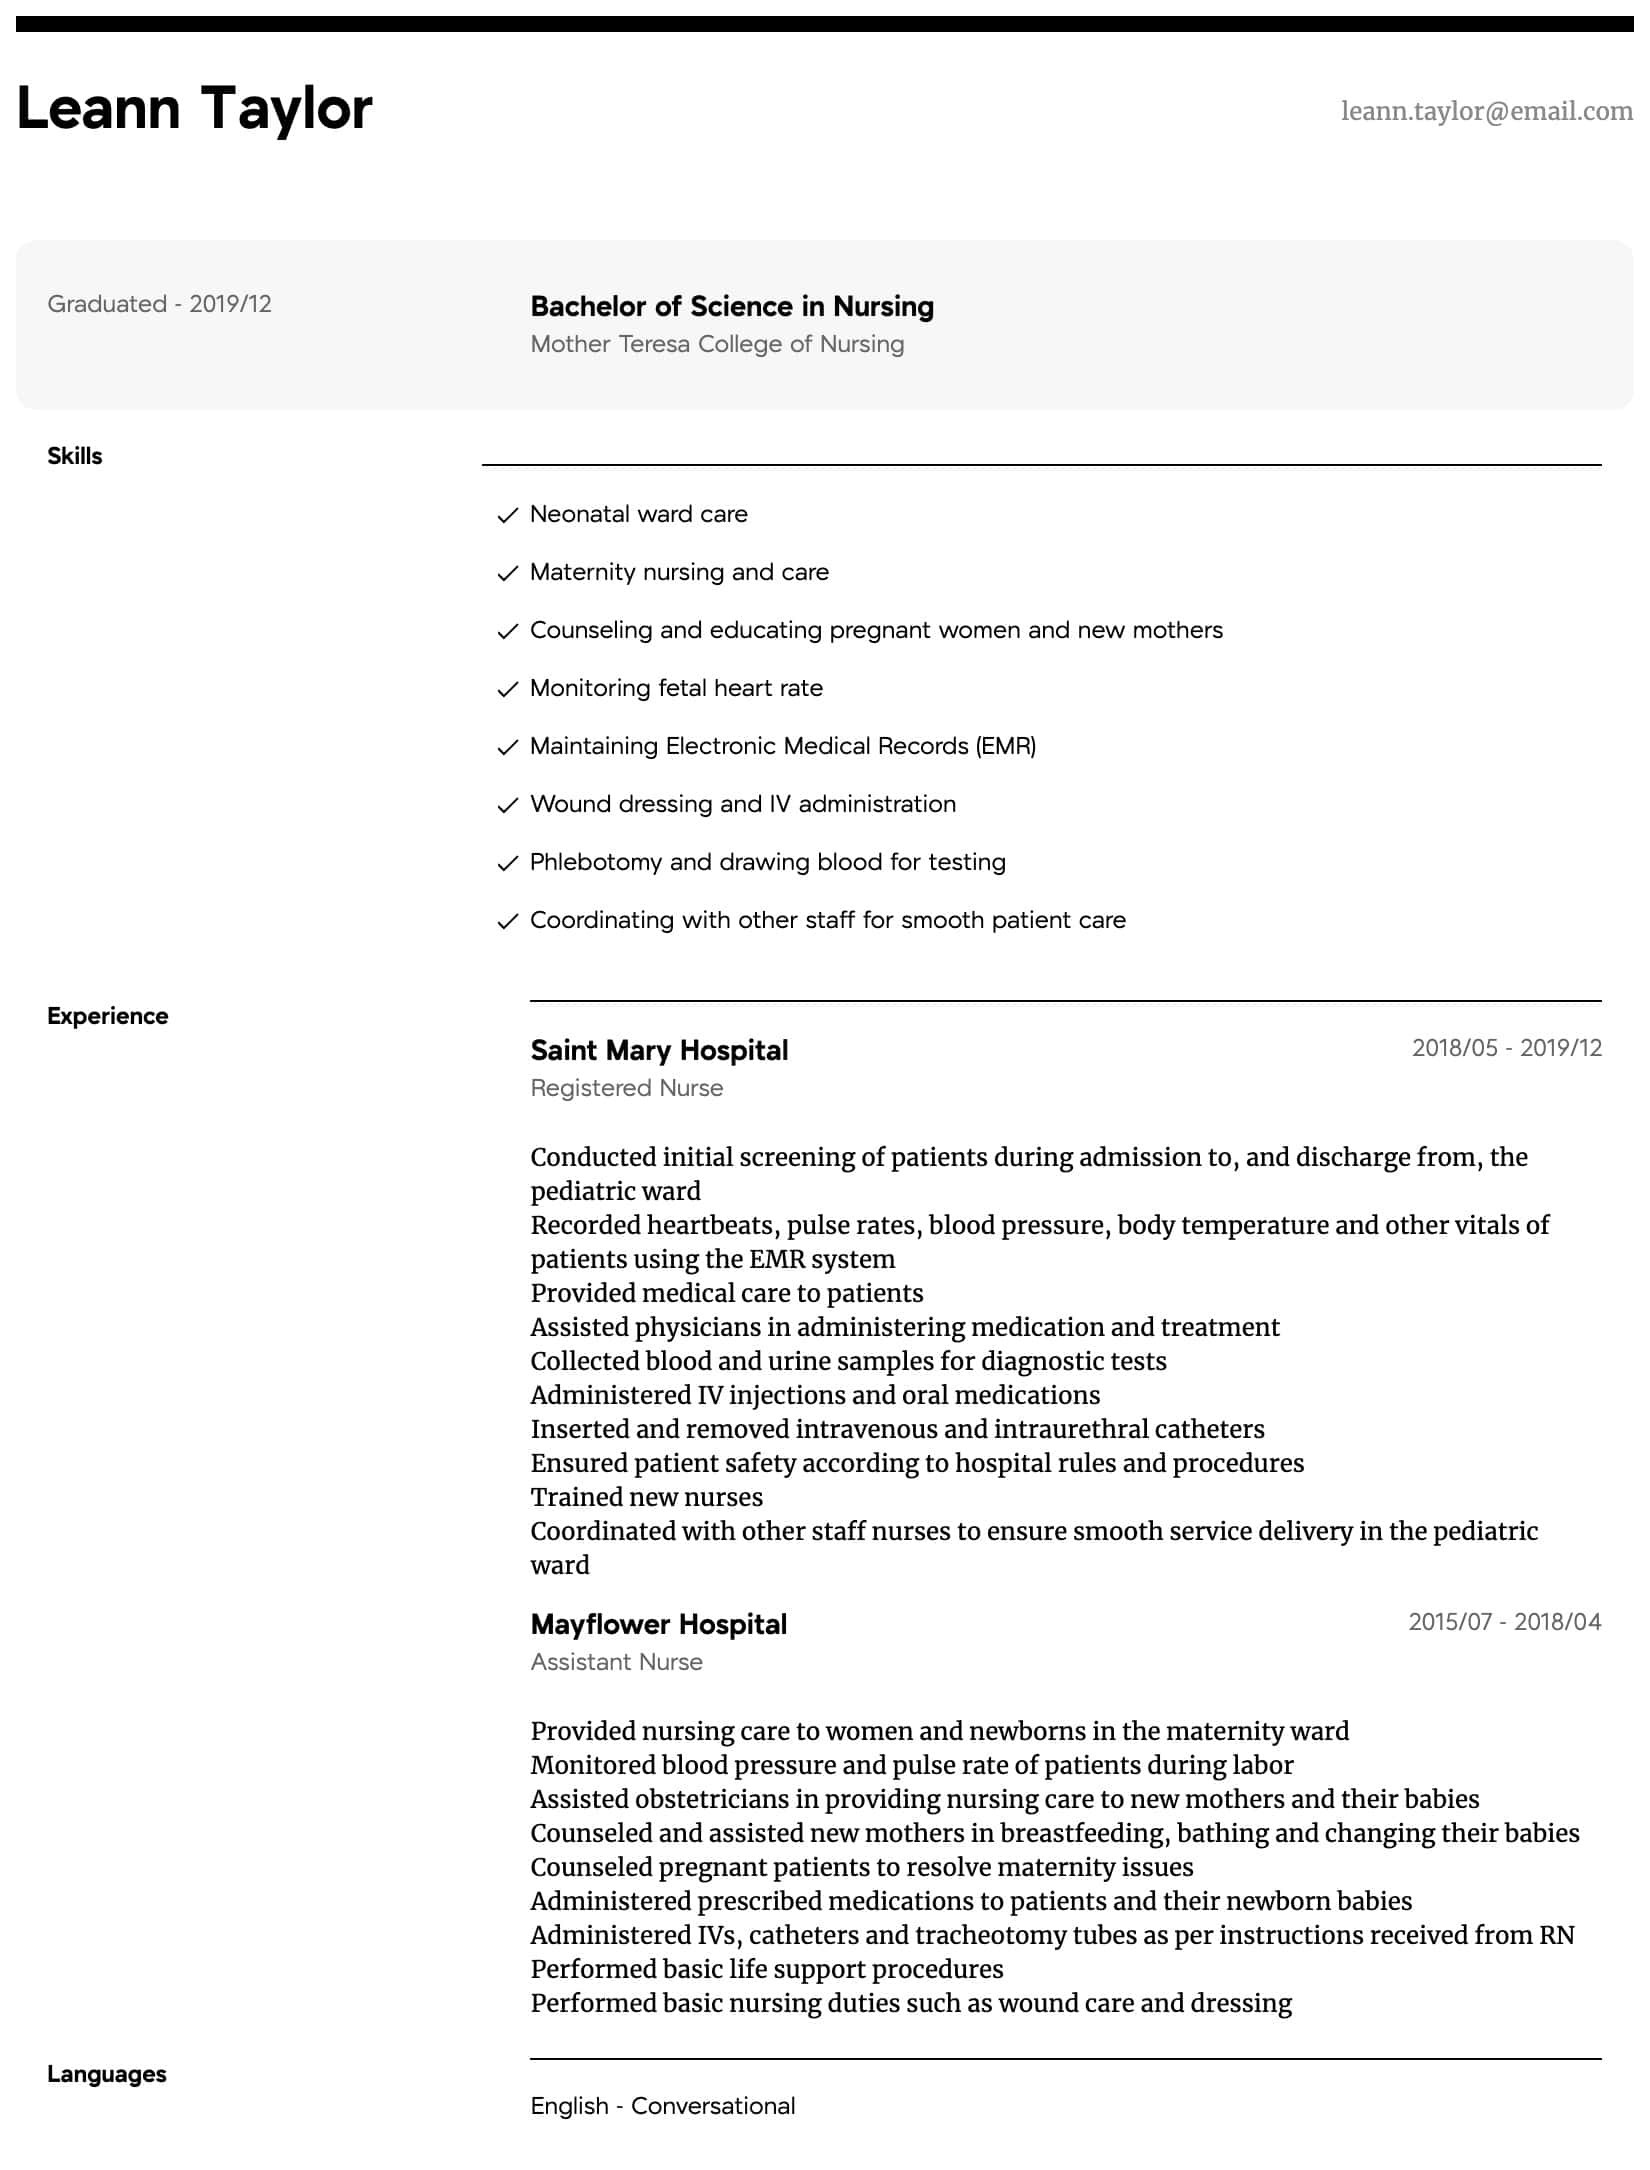 Sample Nursing Resume with Clinical Experience Bsn Nursing Resume Samples All Experience Levels Resume.com …